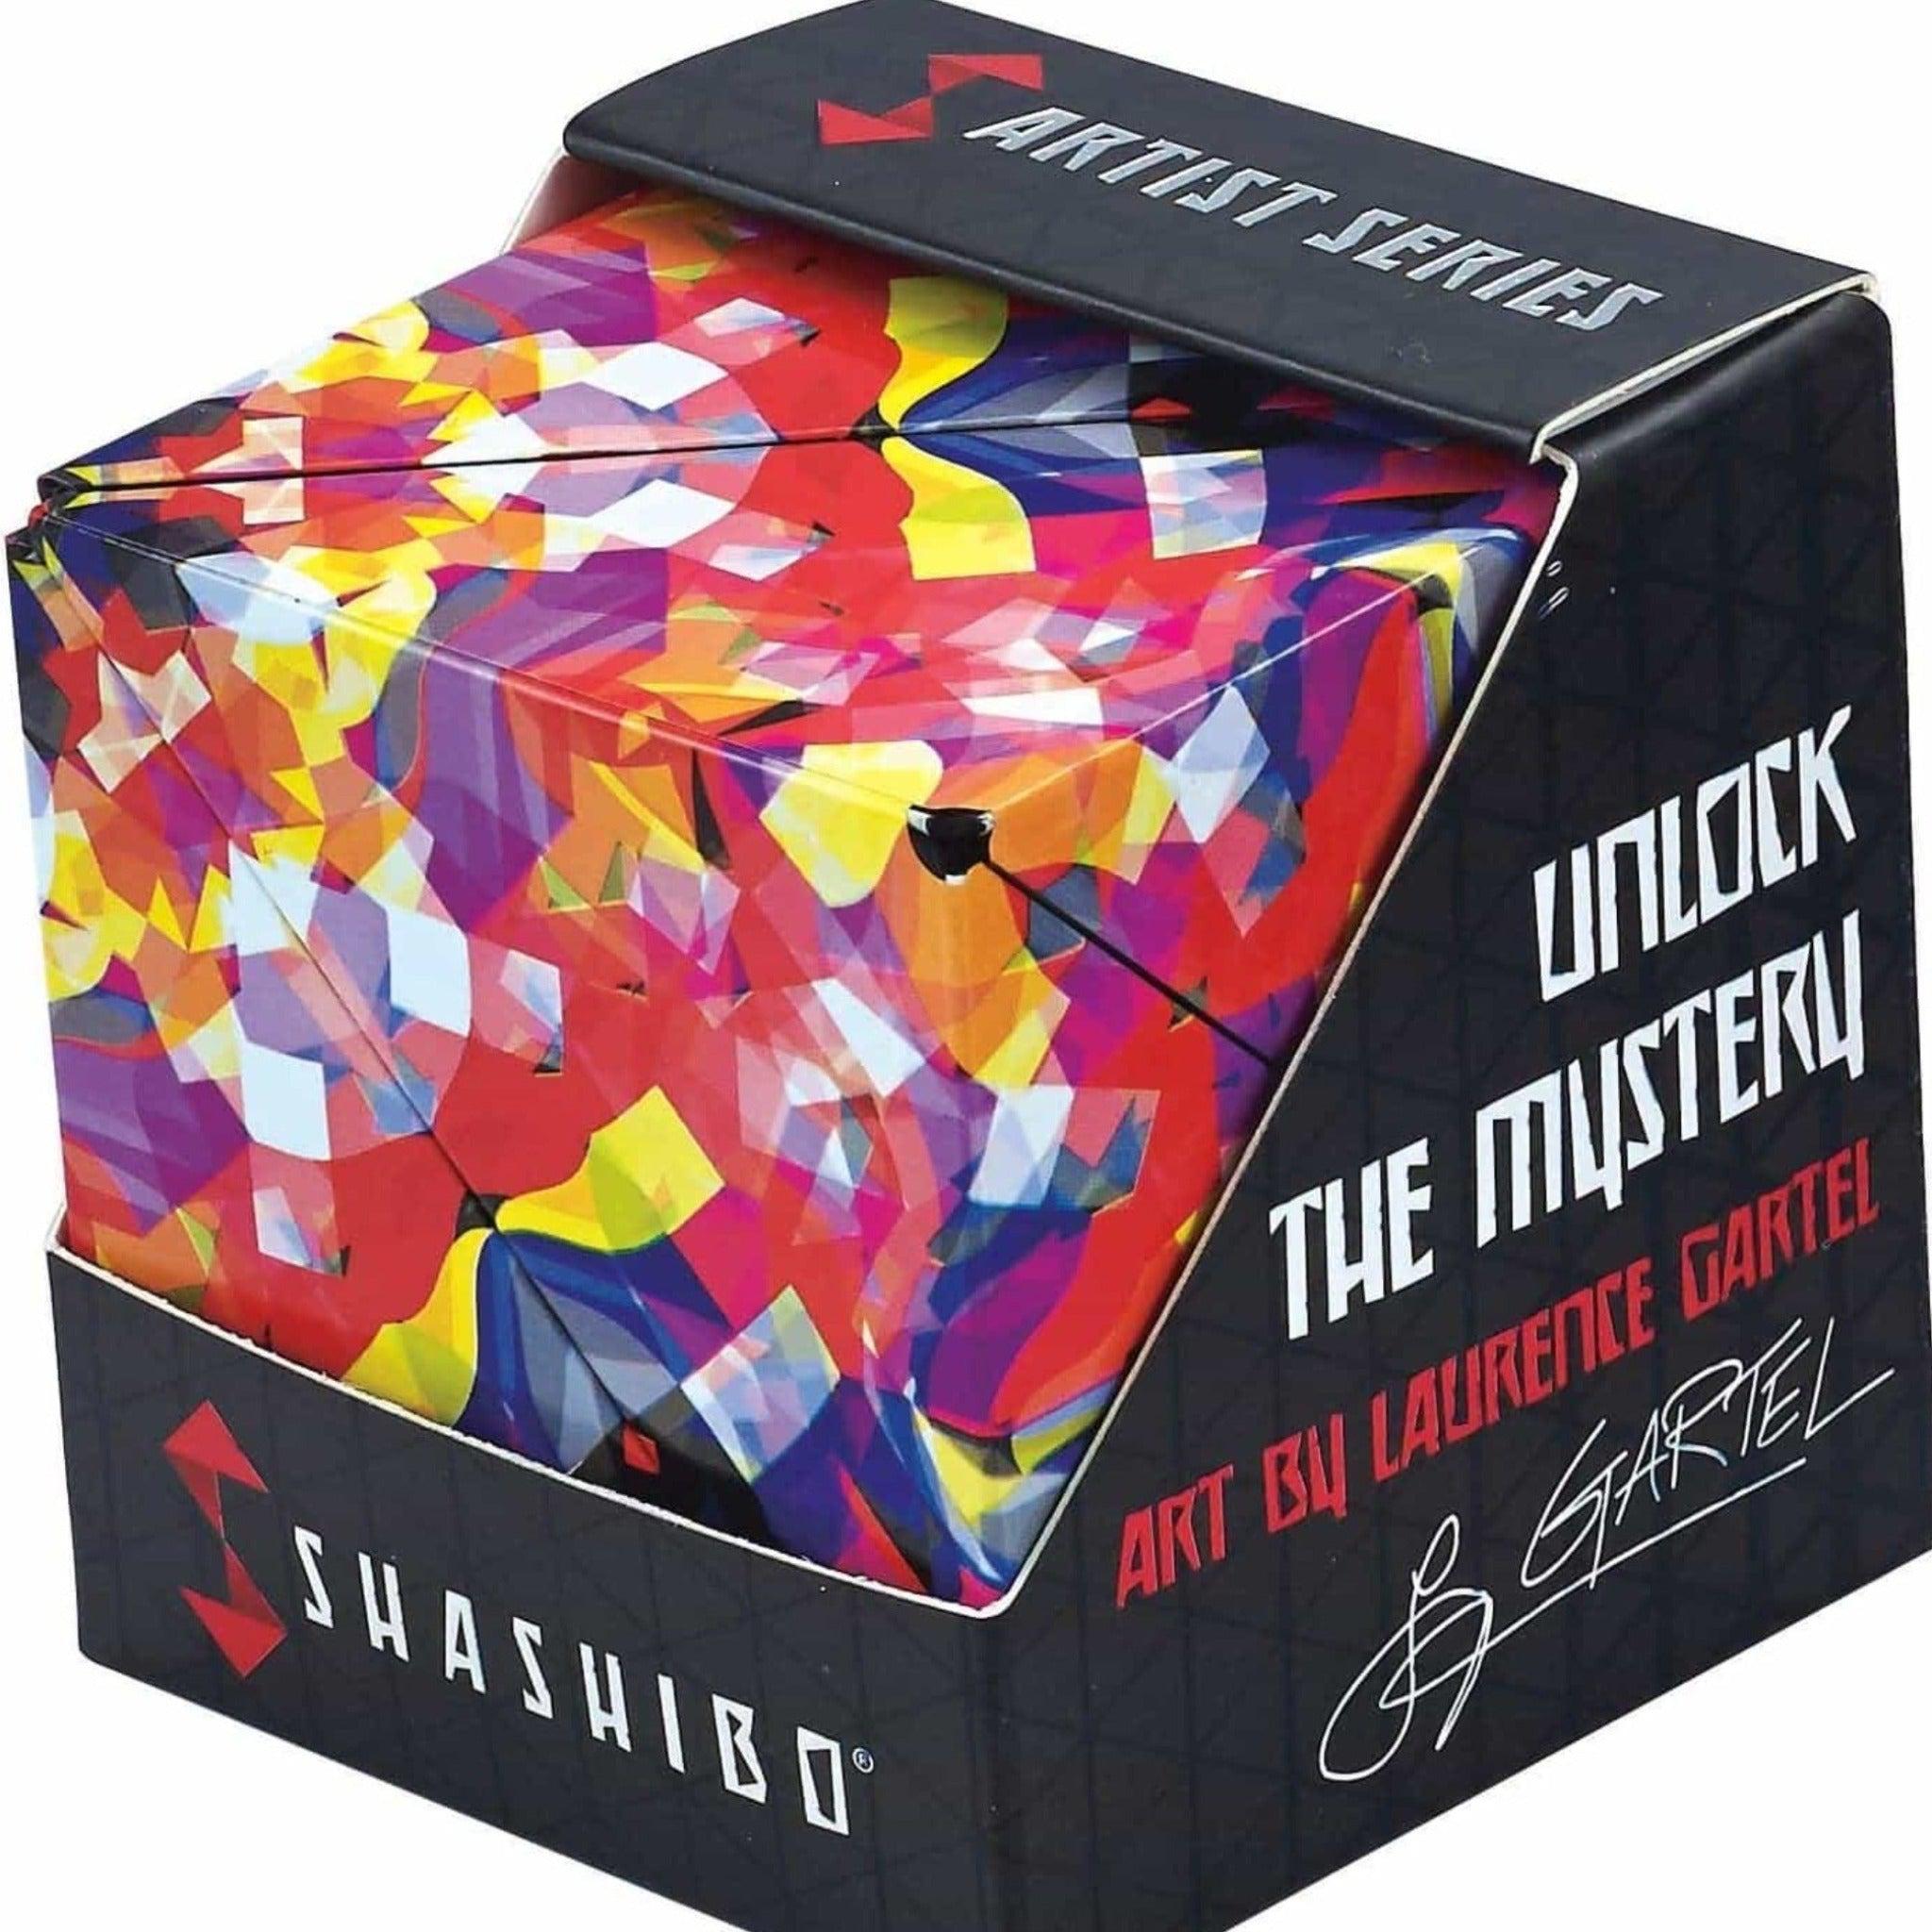 Popular magnetic Shashibo fidget cubes drop under $20